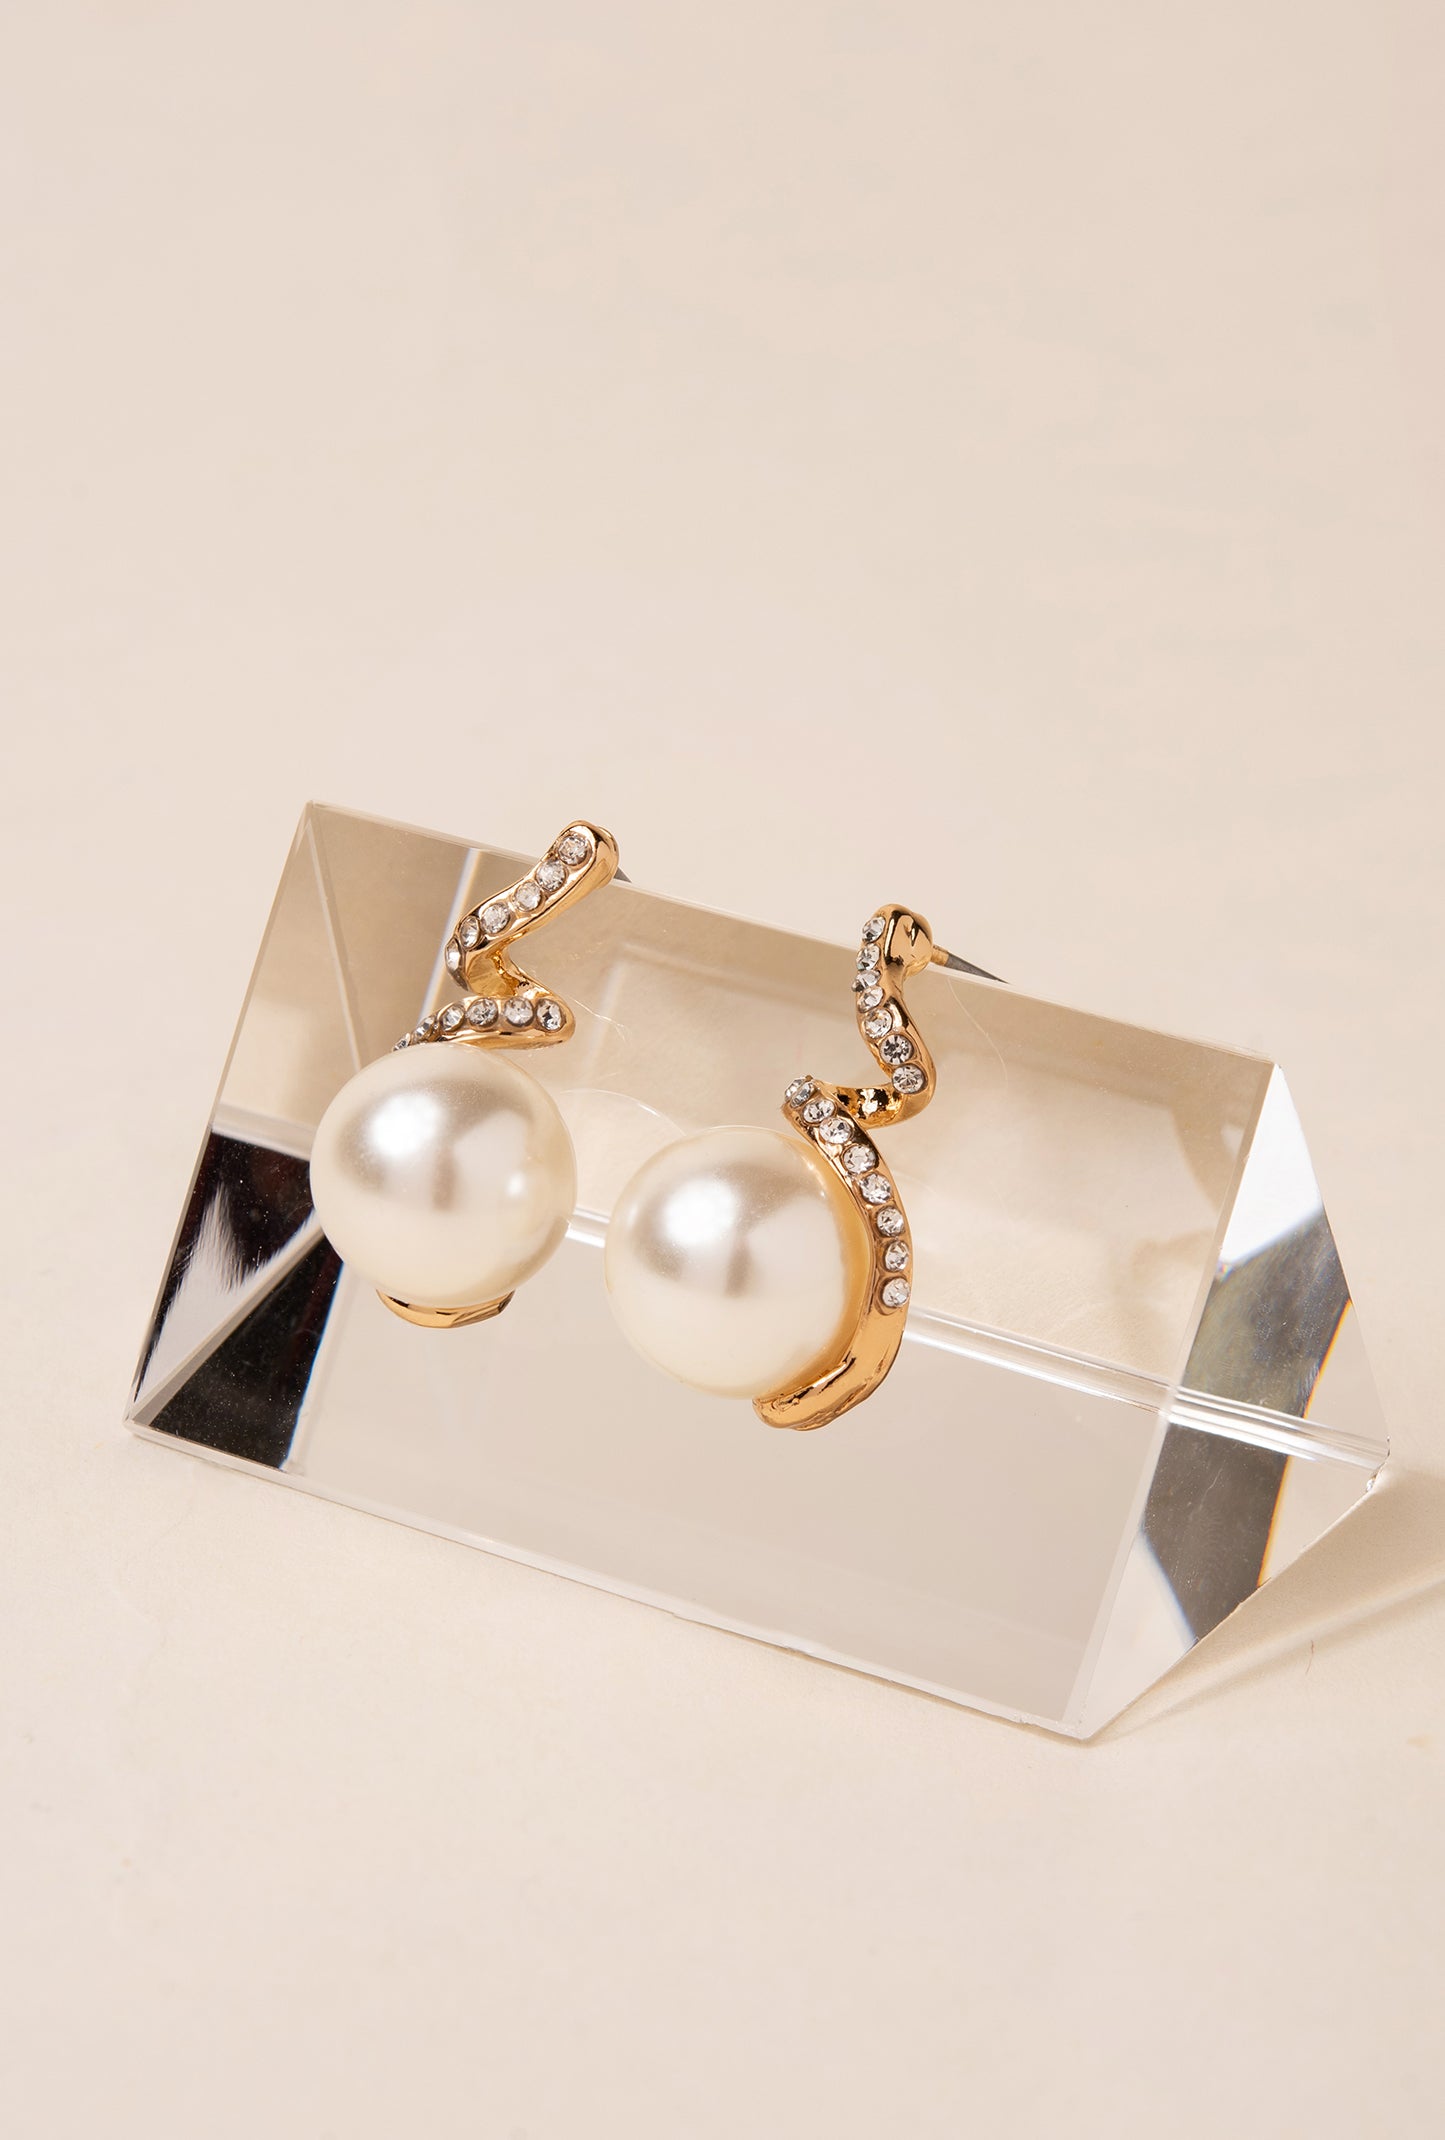 Rhinestone Swirl with Pearl Earrings